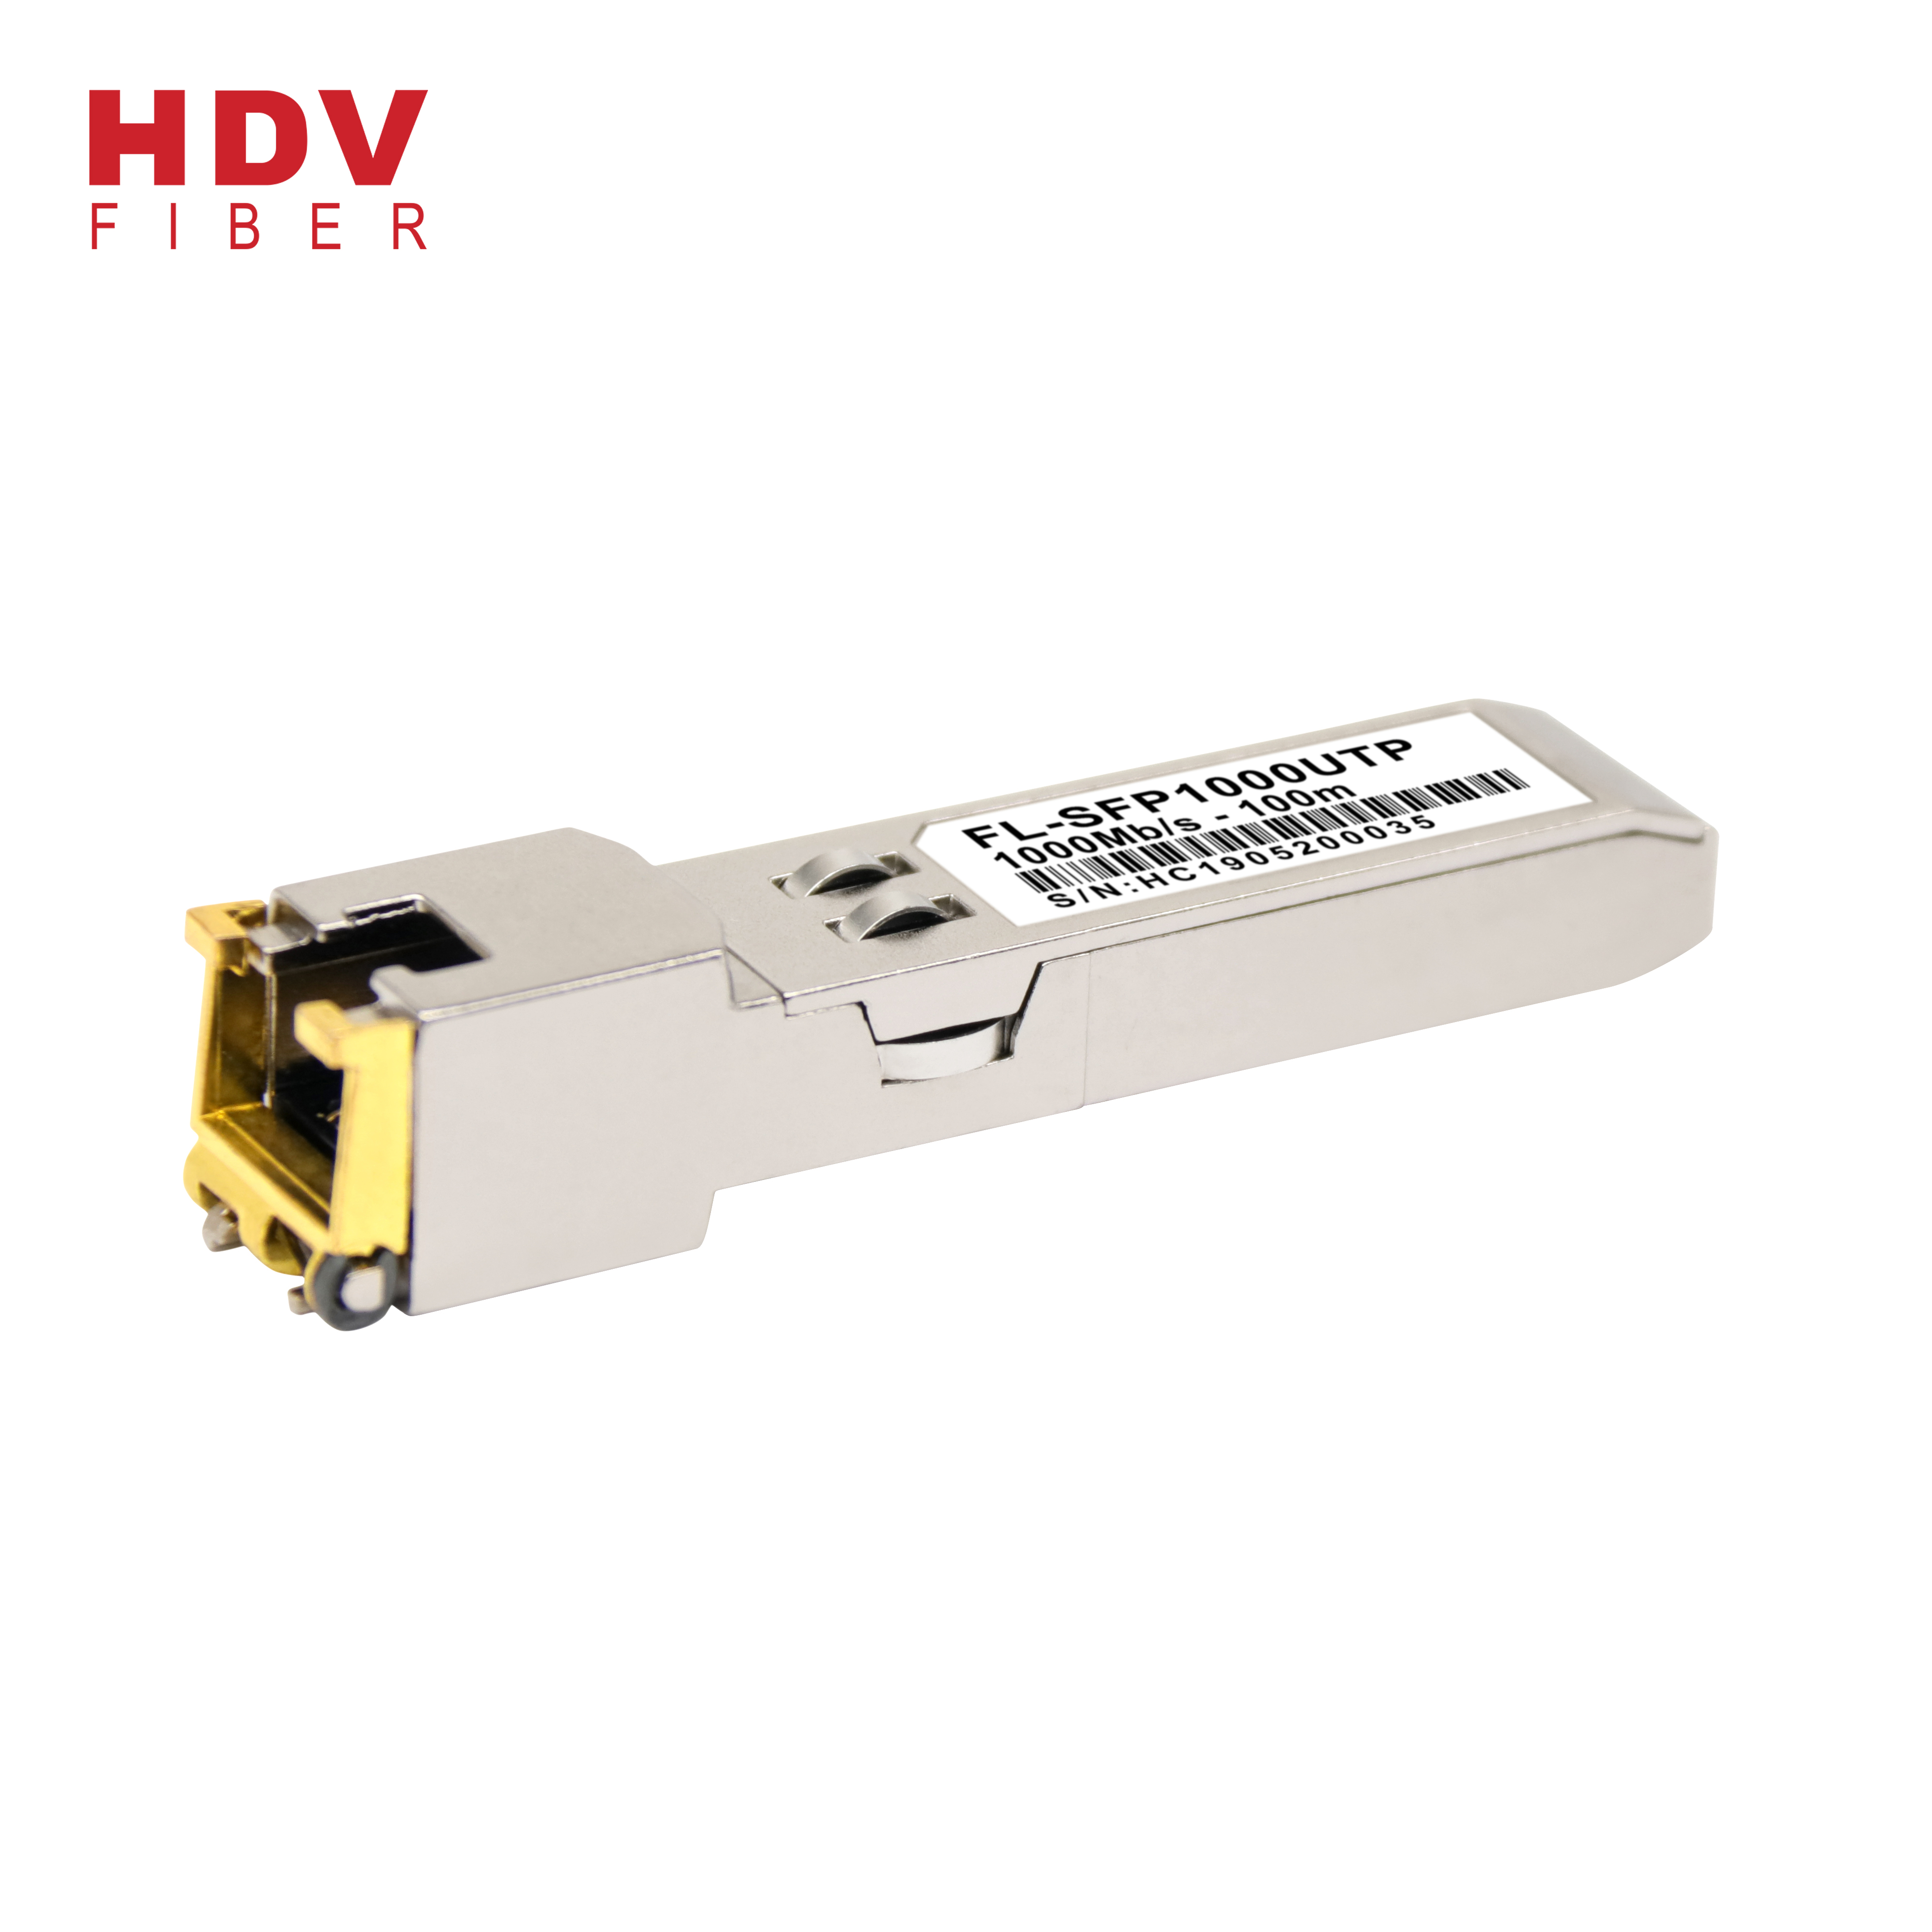 Wholesale Fiber Onu Price - copper sfp module 1000base-t sfp rj45 100m optical transceiver compatible with cisco – HDV